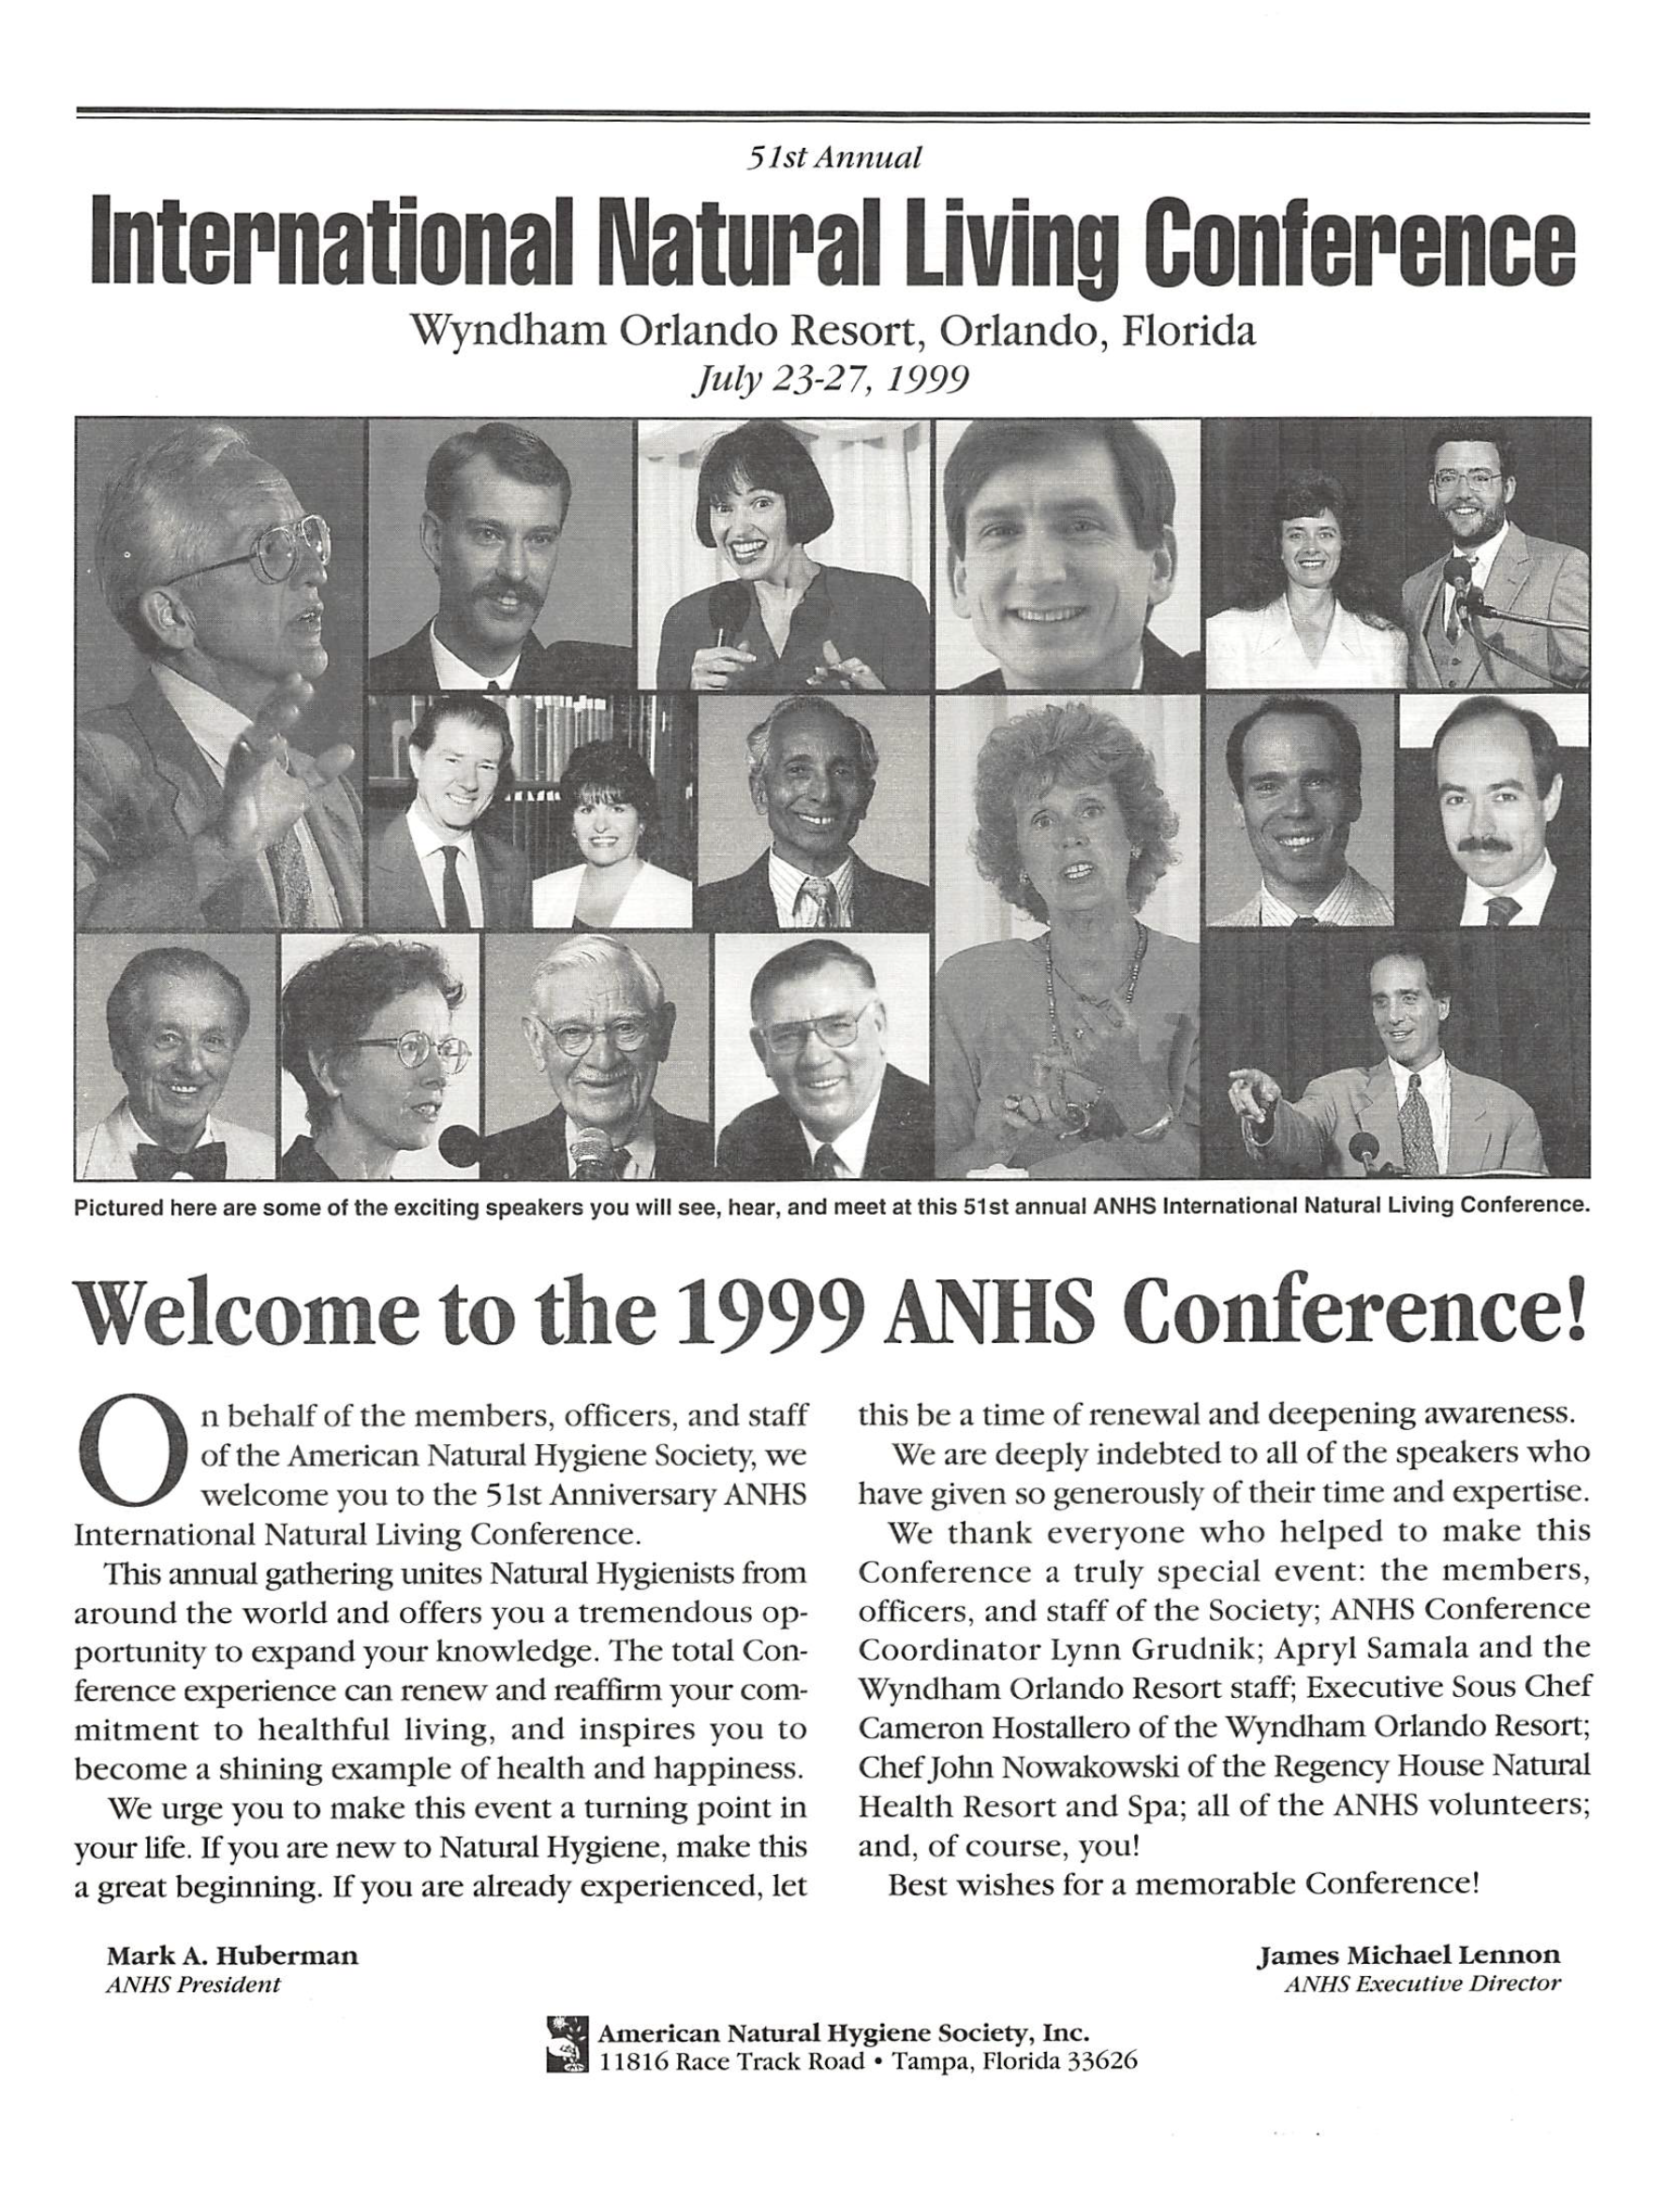 Conference Program. Orlando 1999